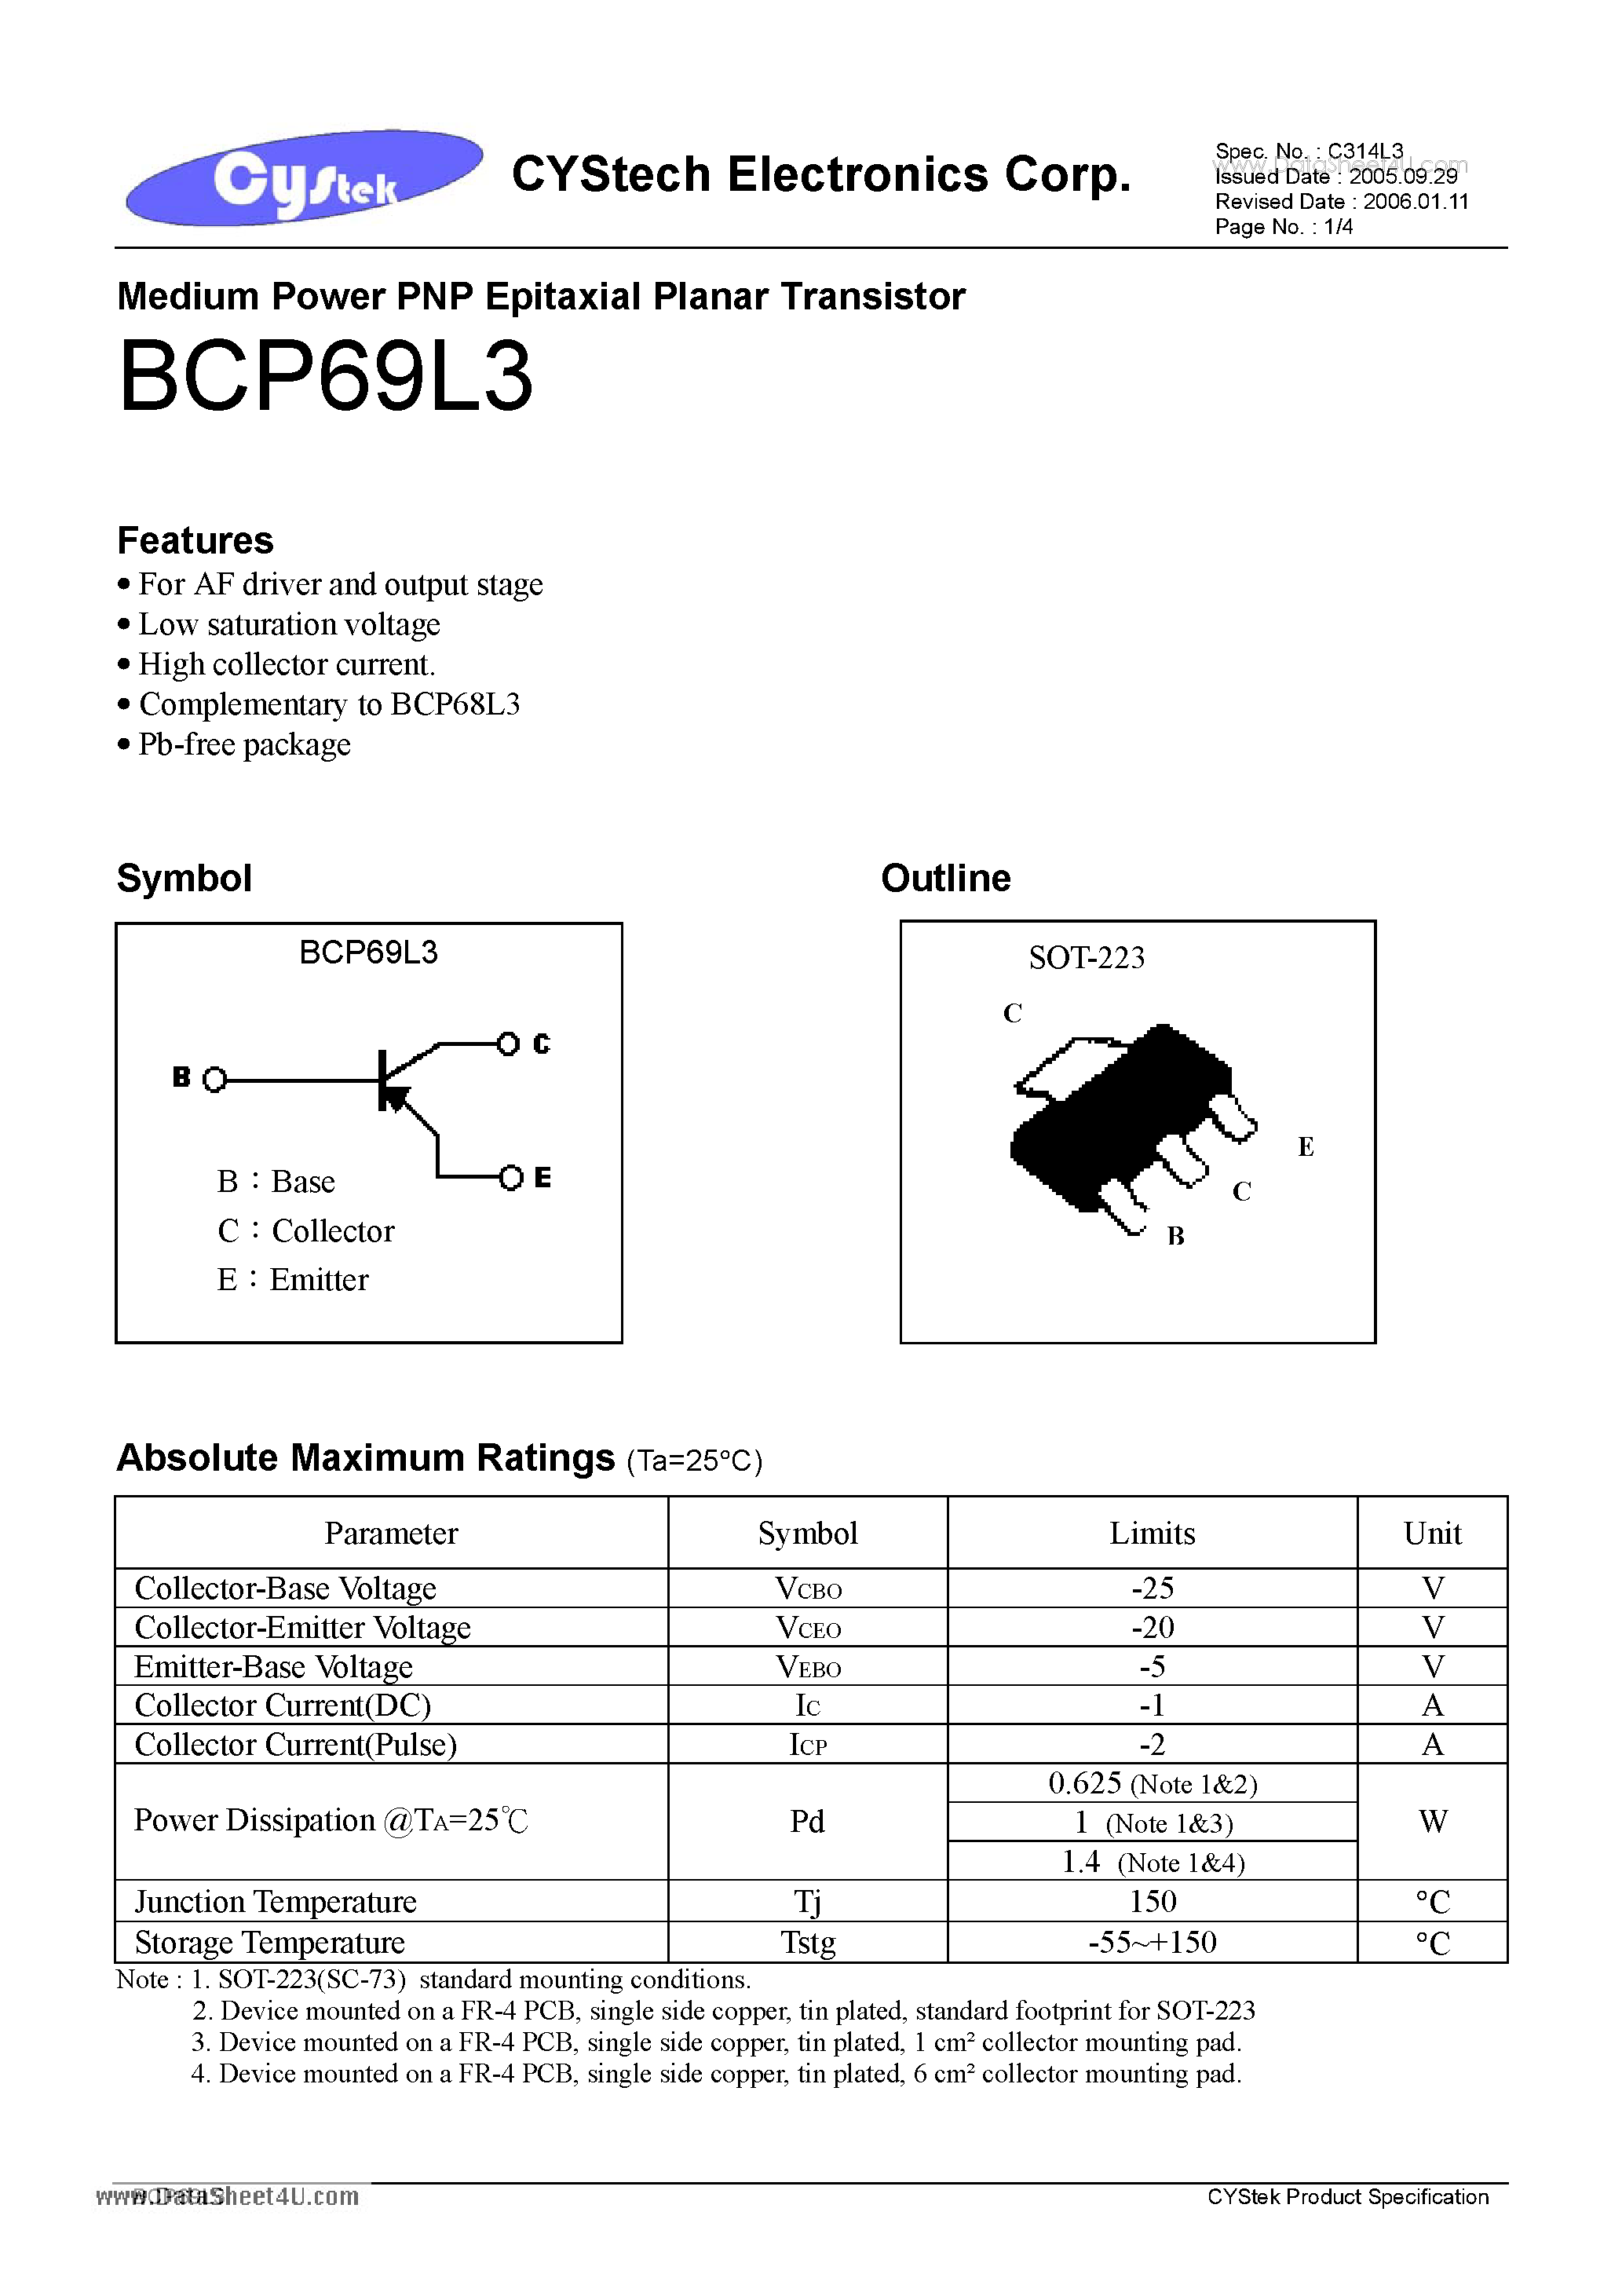 Datasheet BCP69L3 - Medium Power PNP Epitaxial Planar Transistor page 1